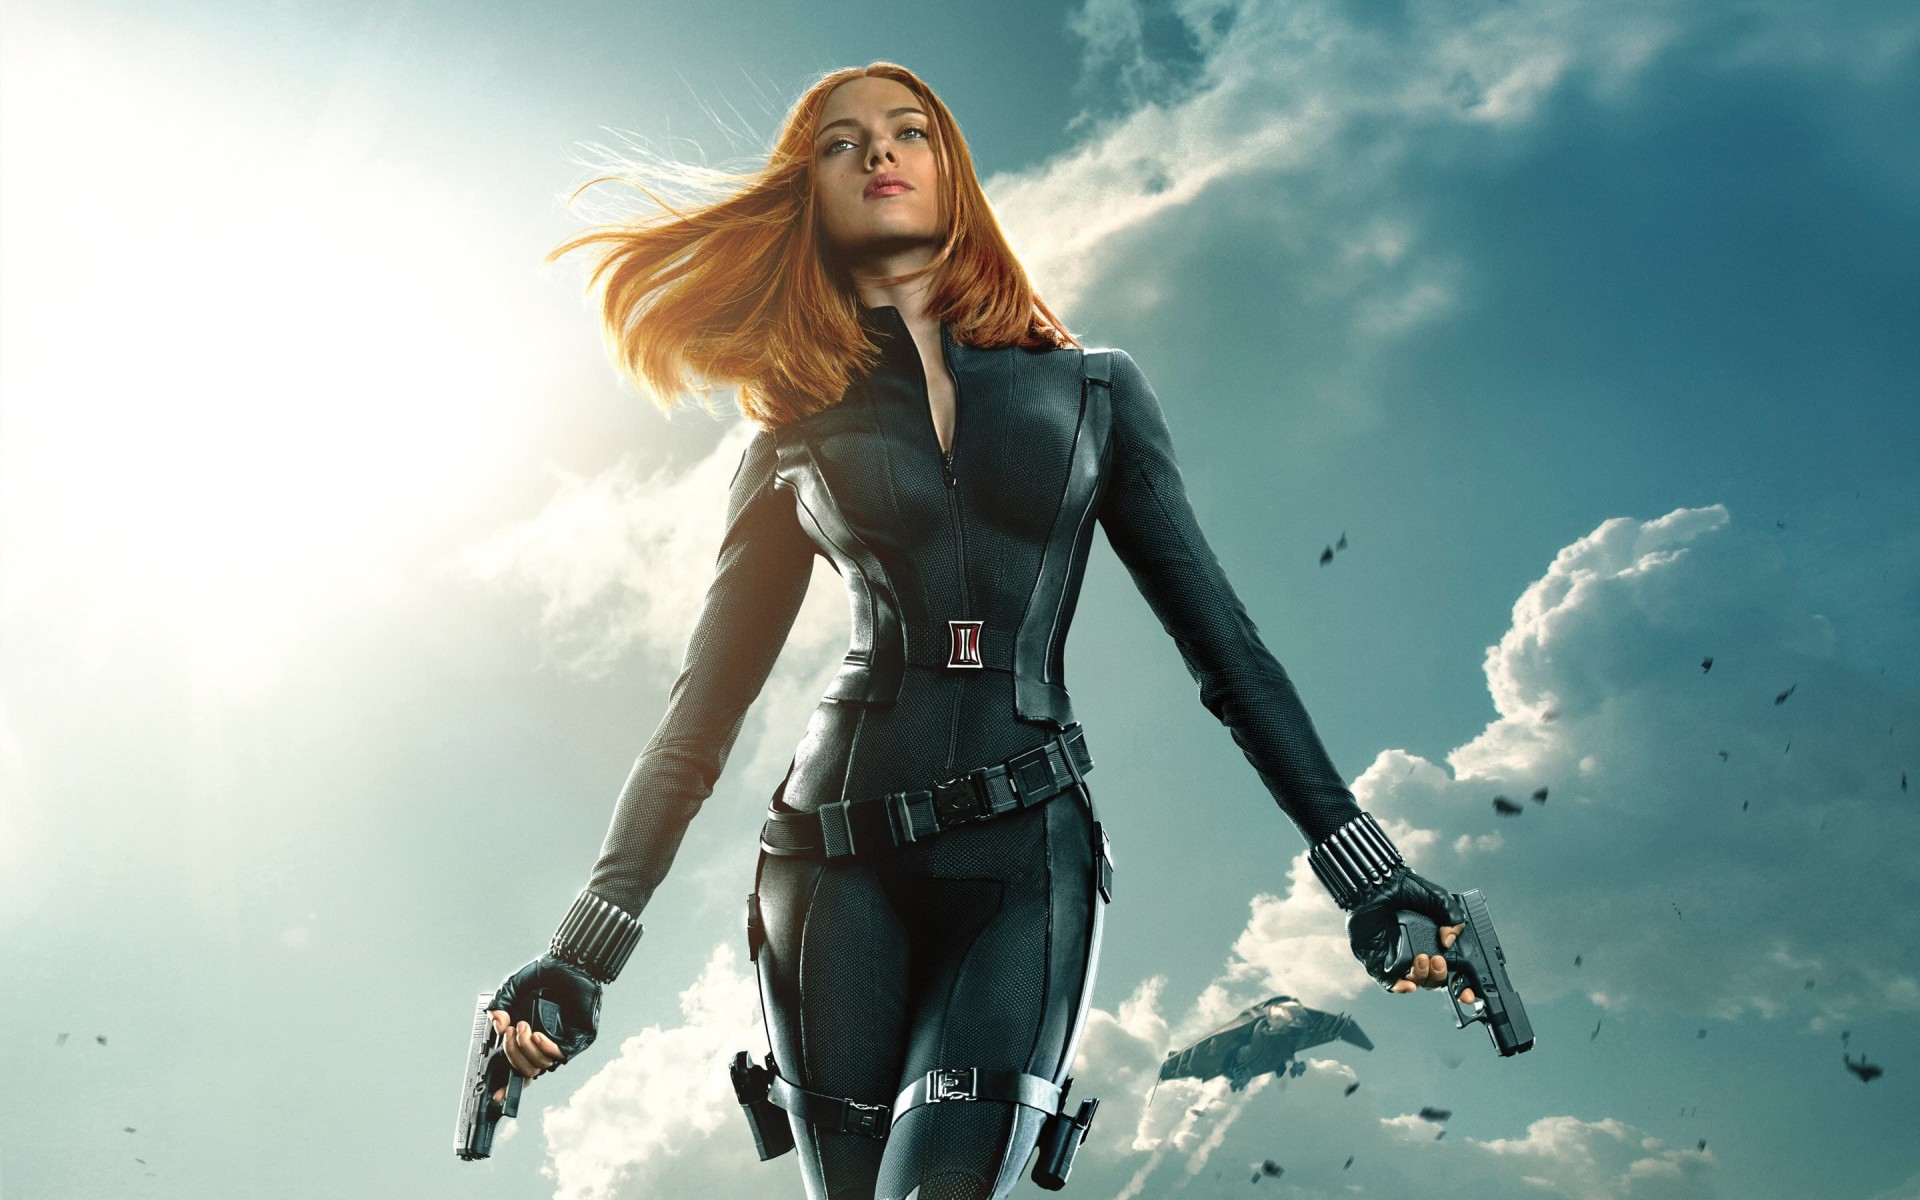 Scarlett Johansson in "Captain America: The Winter Soldier" Wallpaper for Desktop 1920x1200